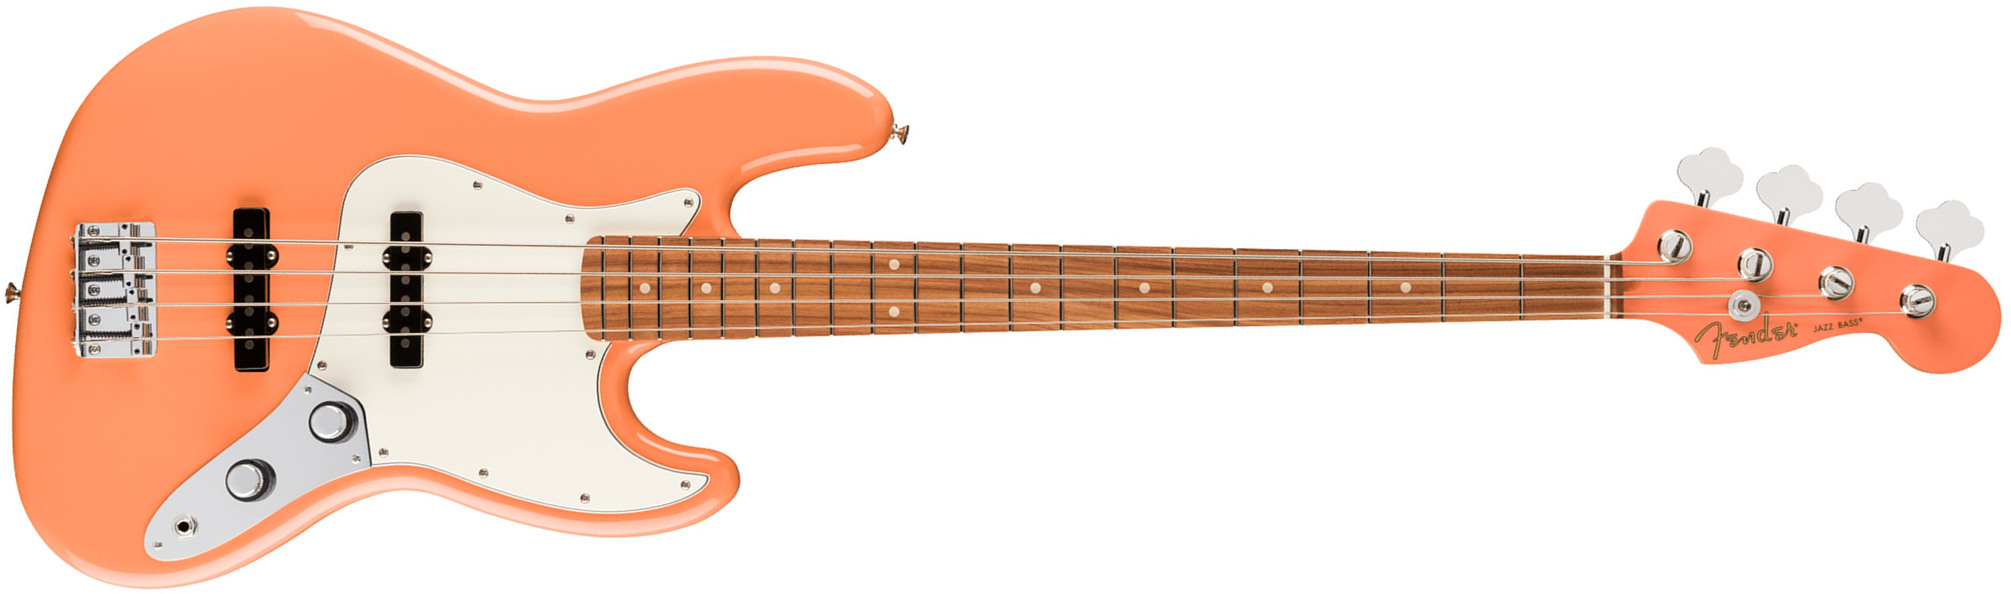 Fender Jazz Bass Player Mex Ltd Pf - Pacific Peach - Bajo eléctrico de cuerpo sólido - Main picture